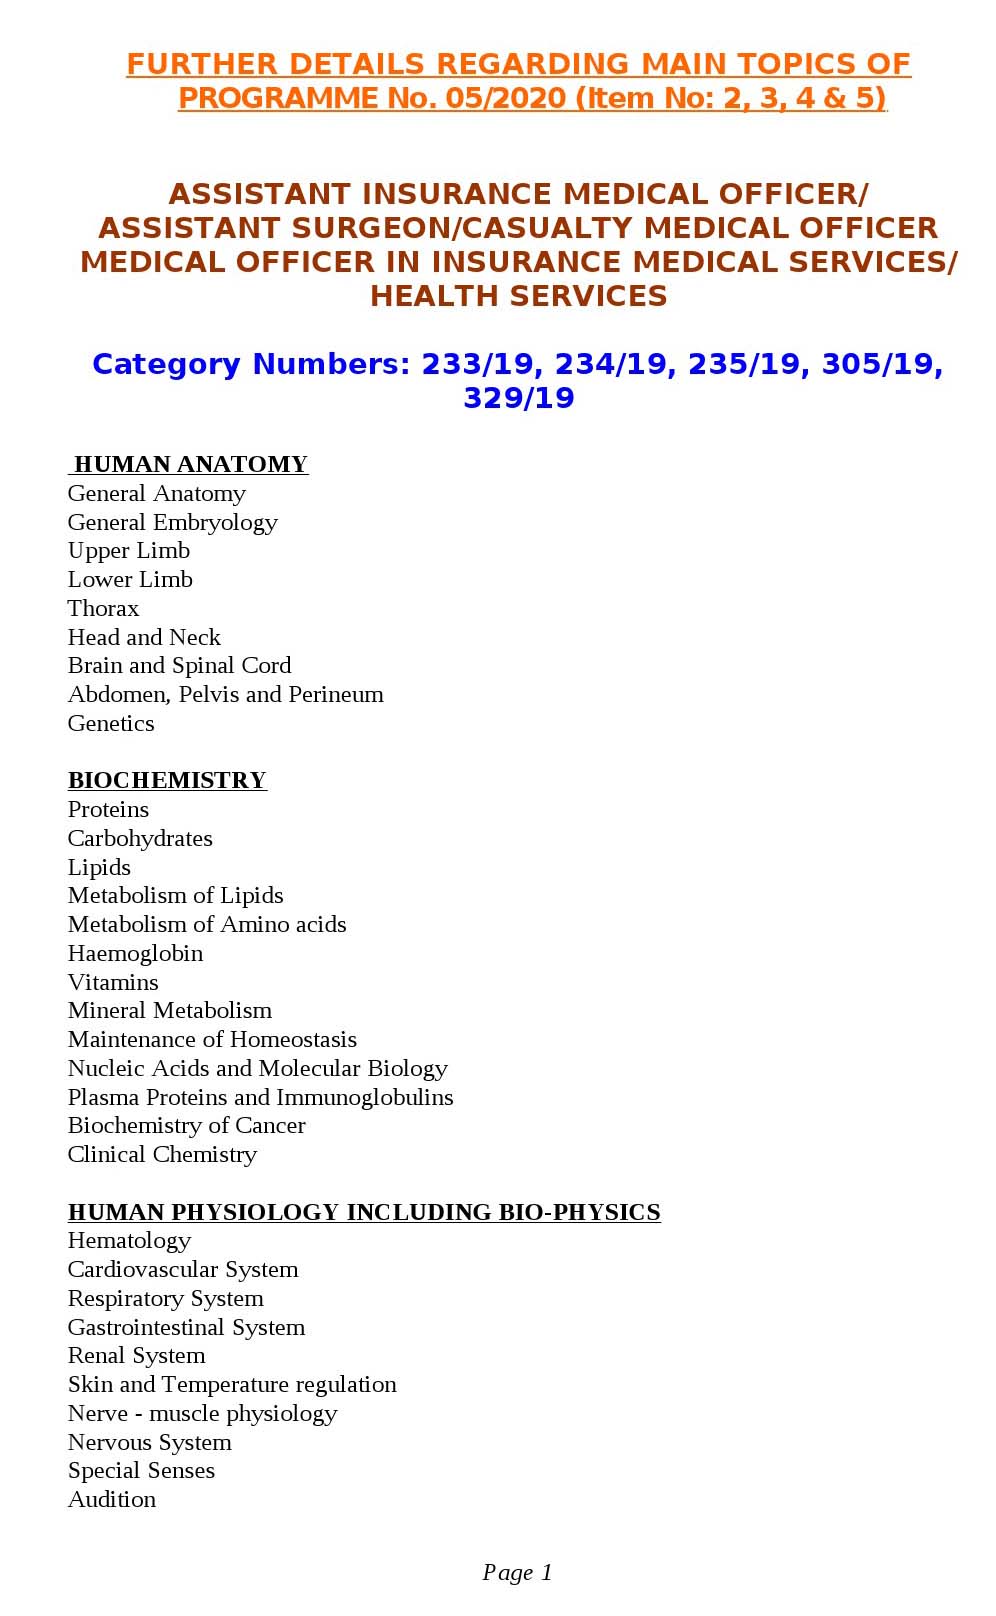 Kerala PSC Assistant Surgeon Exam Syllabus May 2020 - Notification Image 1